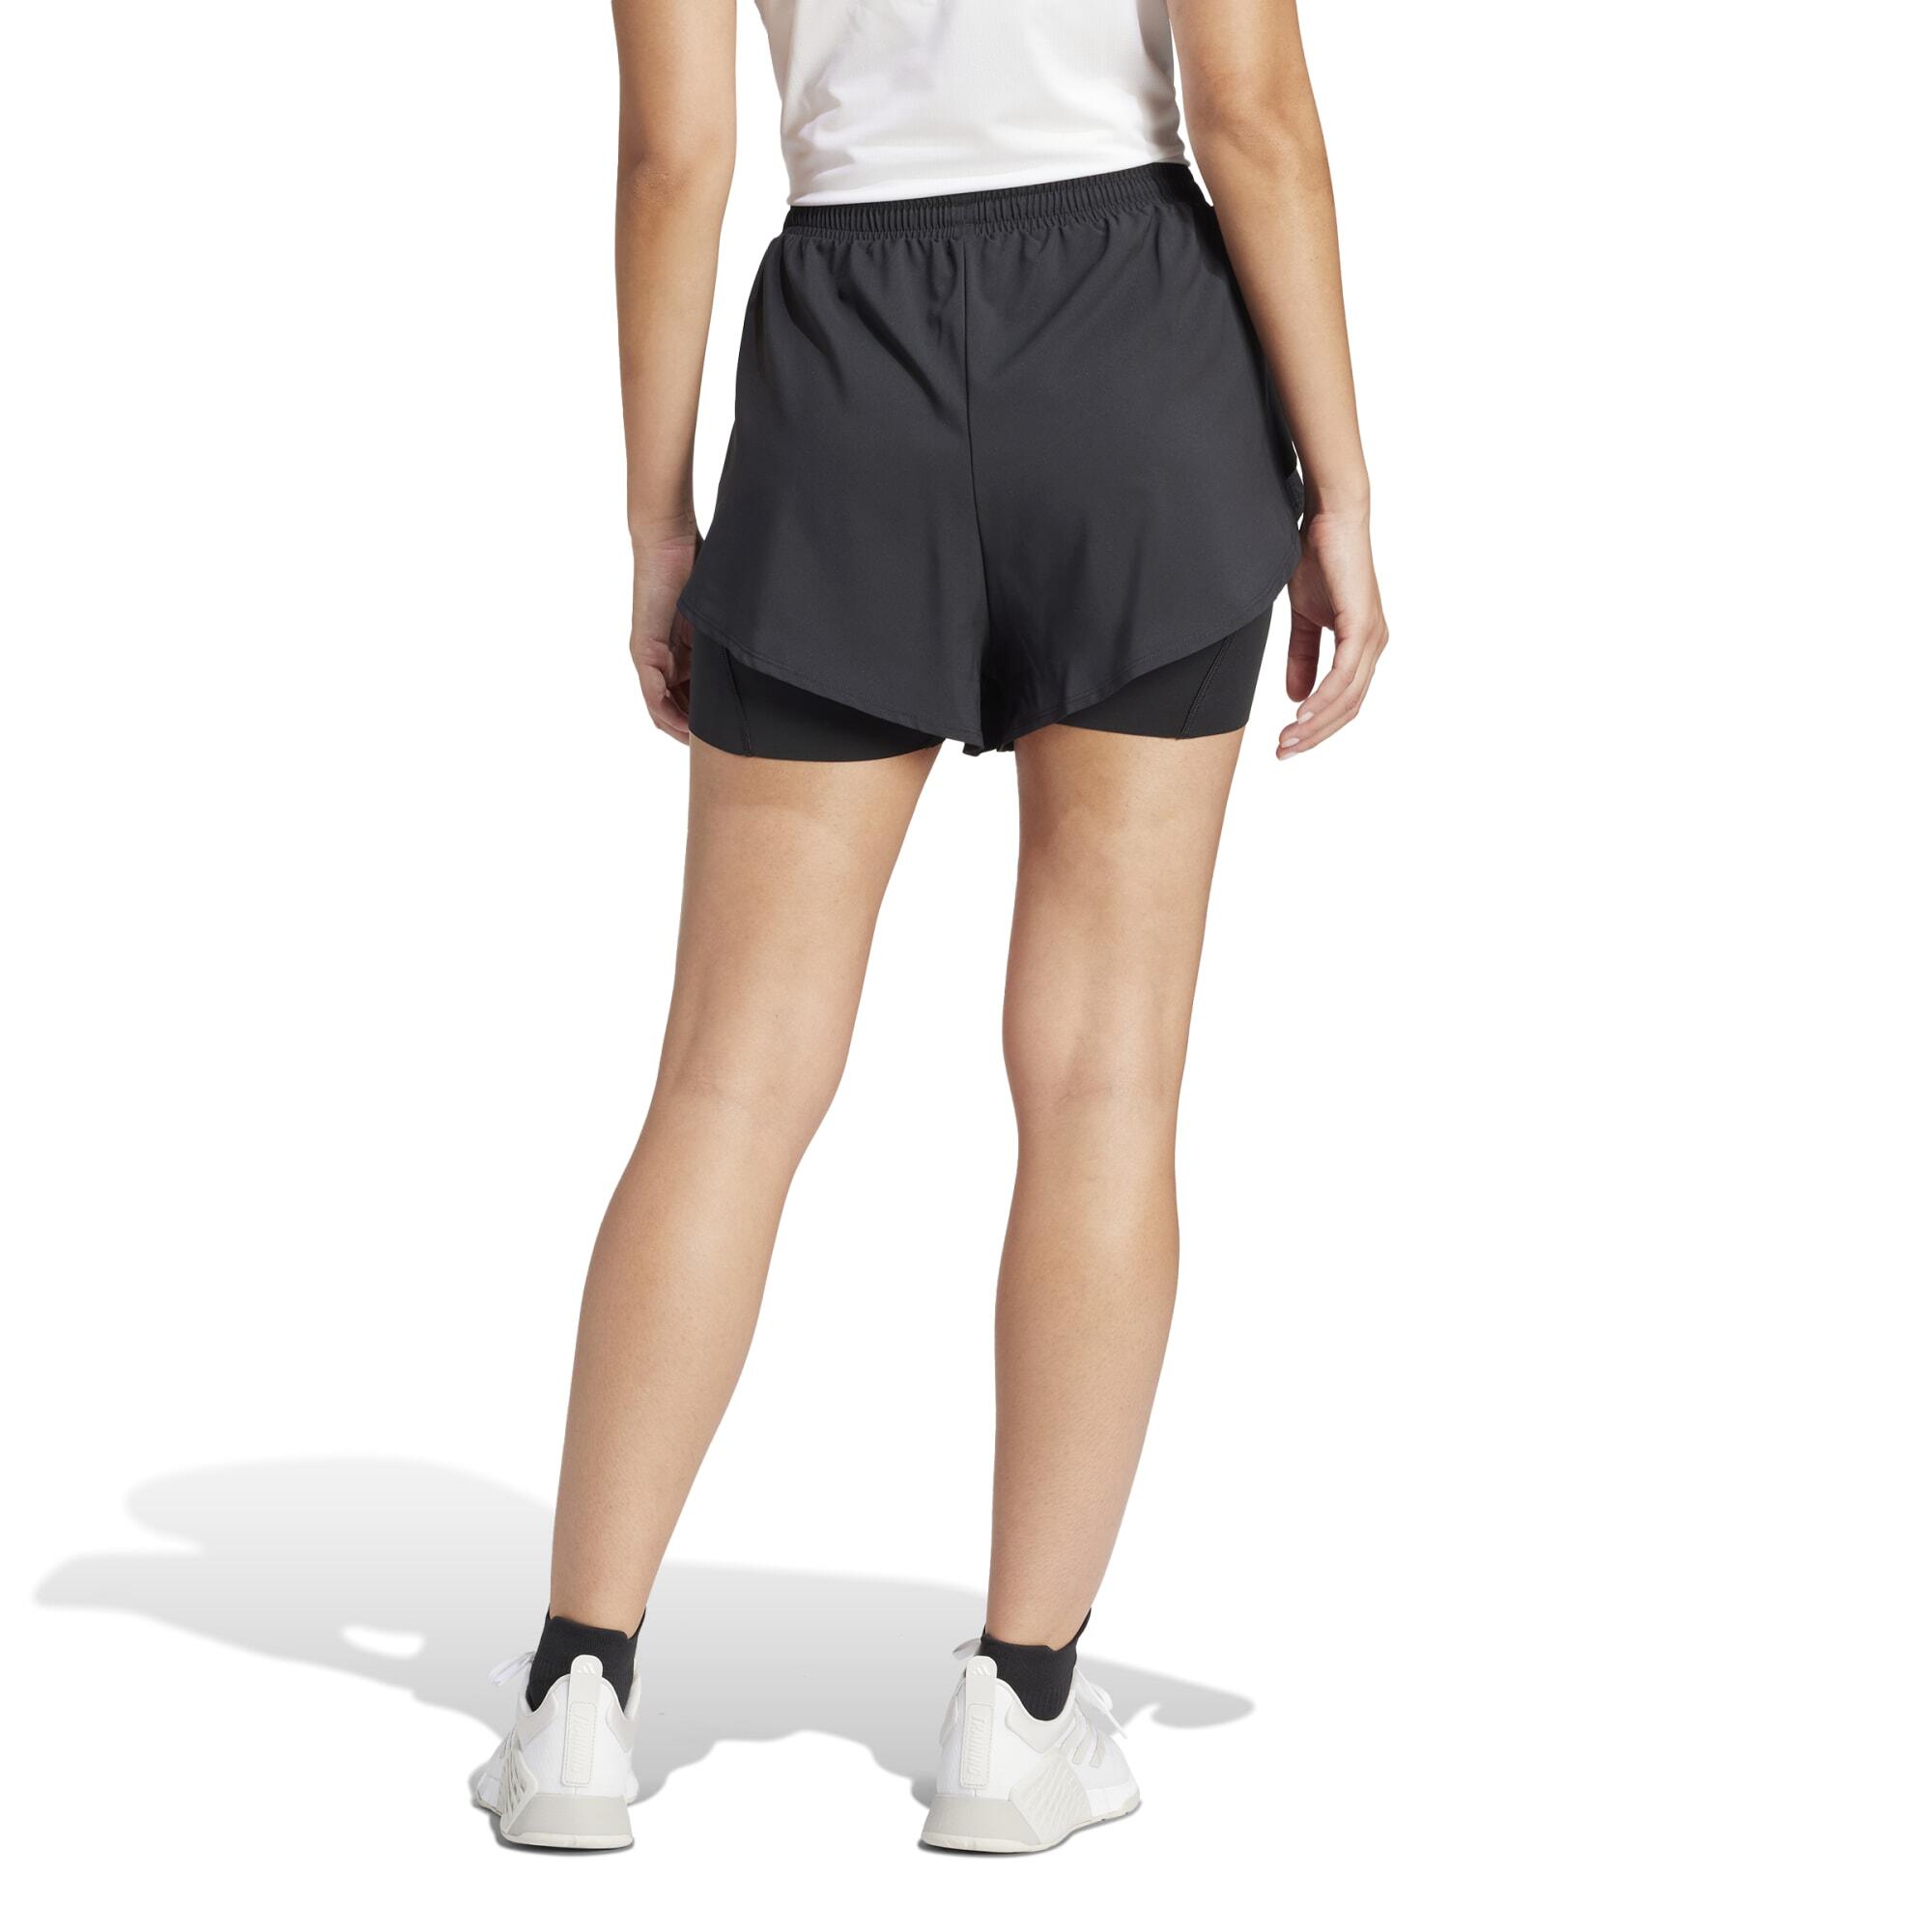 Women's Cardio Fitness Shorts - Black 4/6